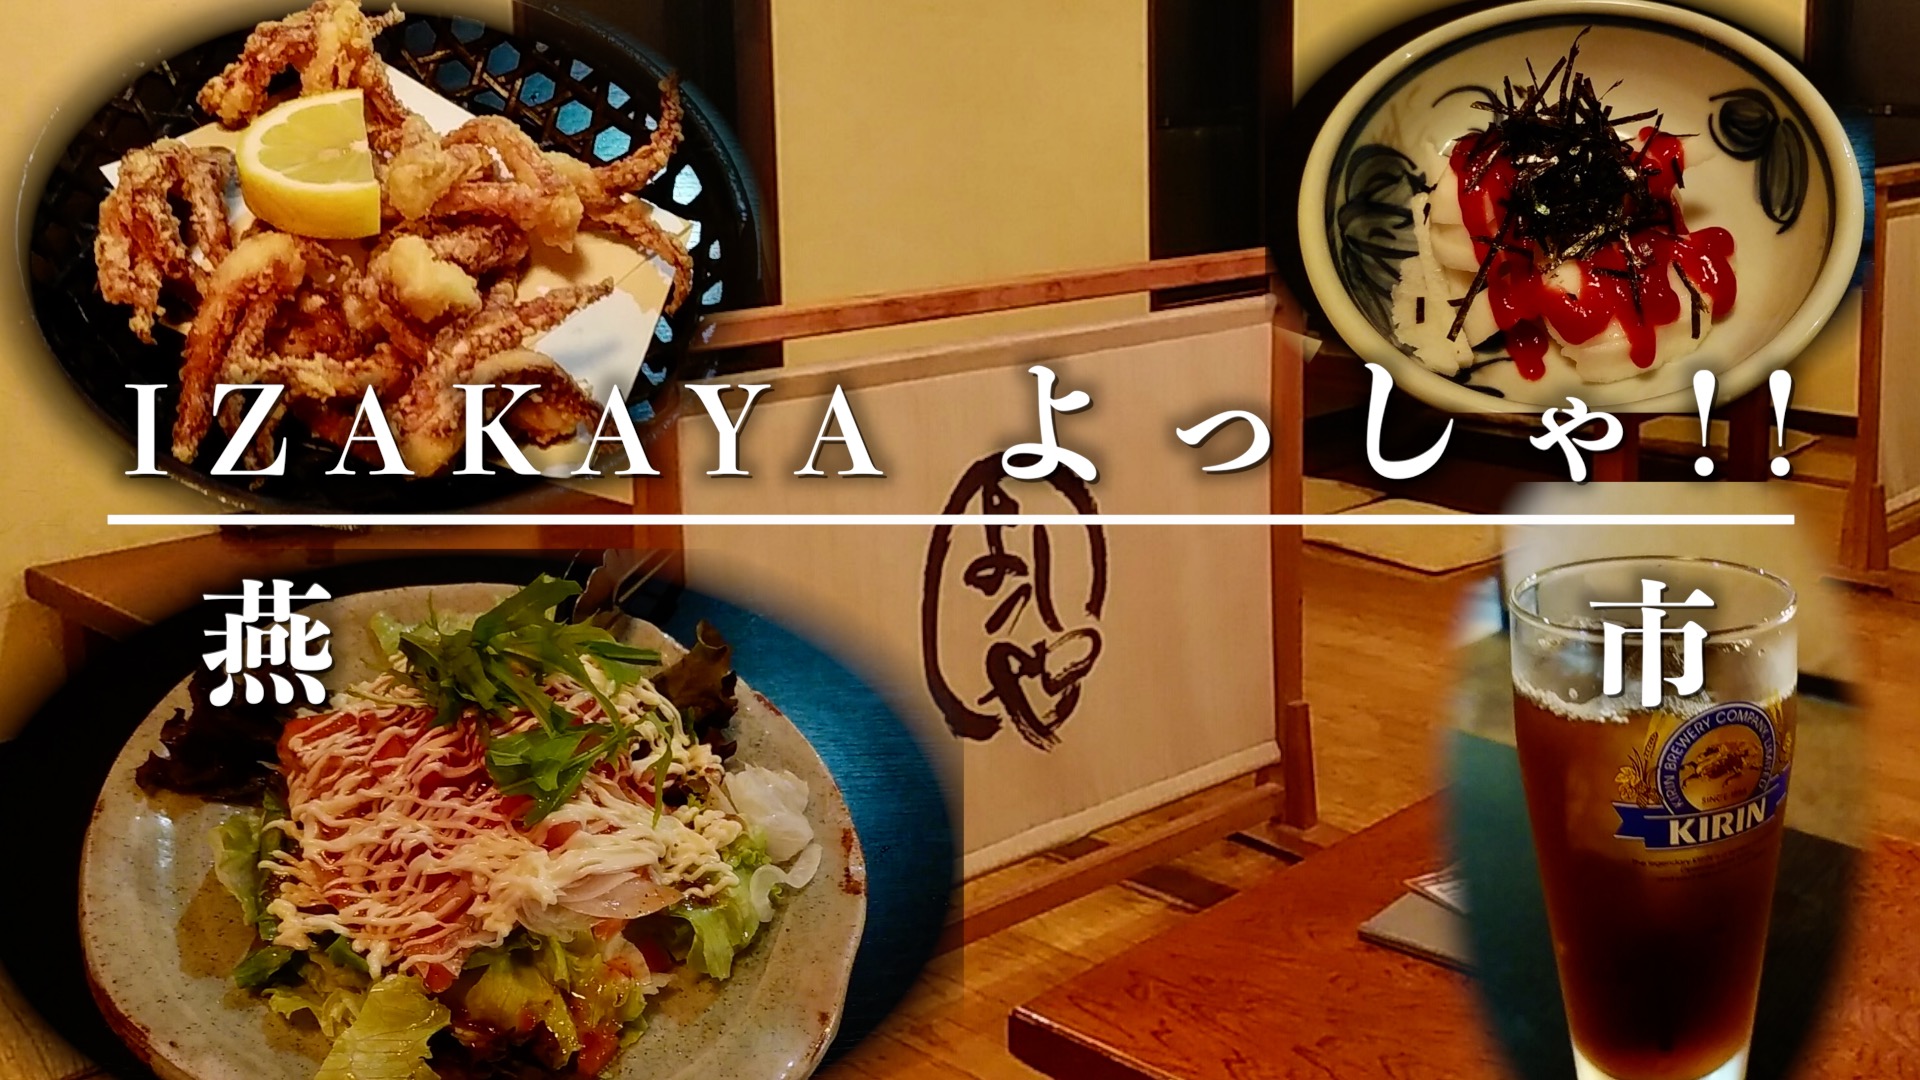 「IZAKAYA よっしゃ!!」のアイキャッチ画像